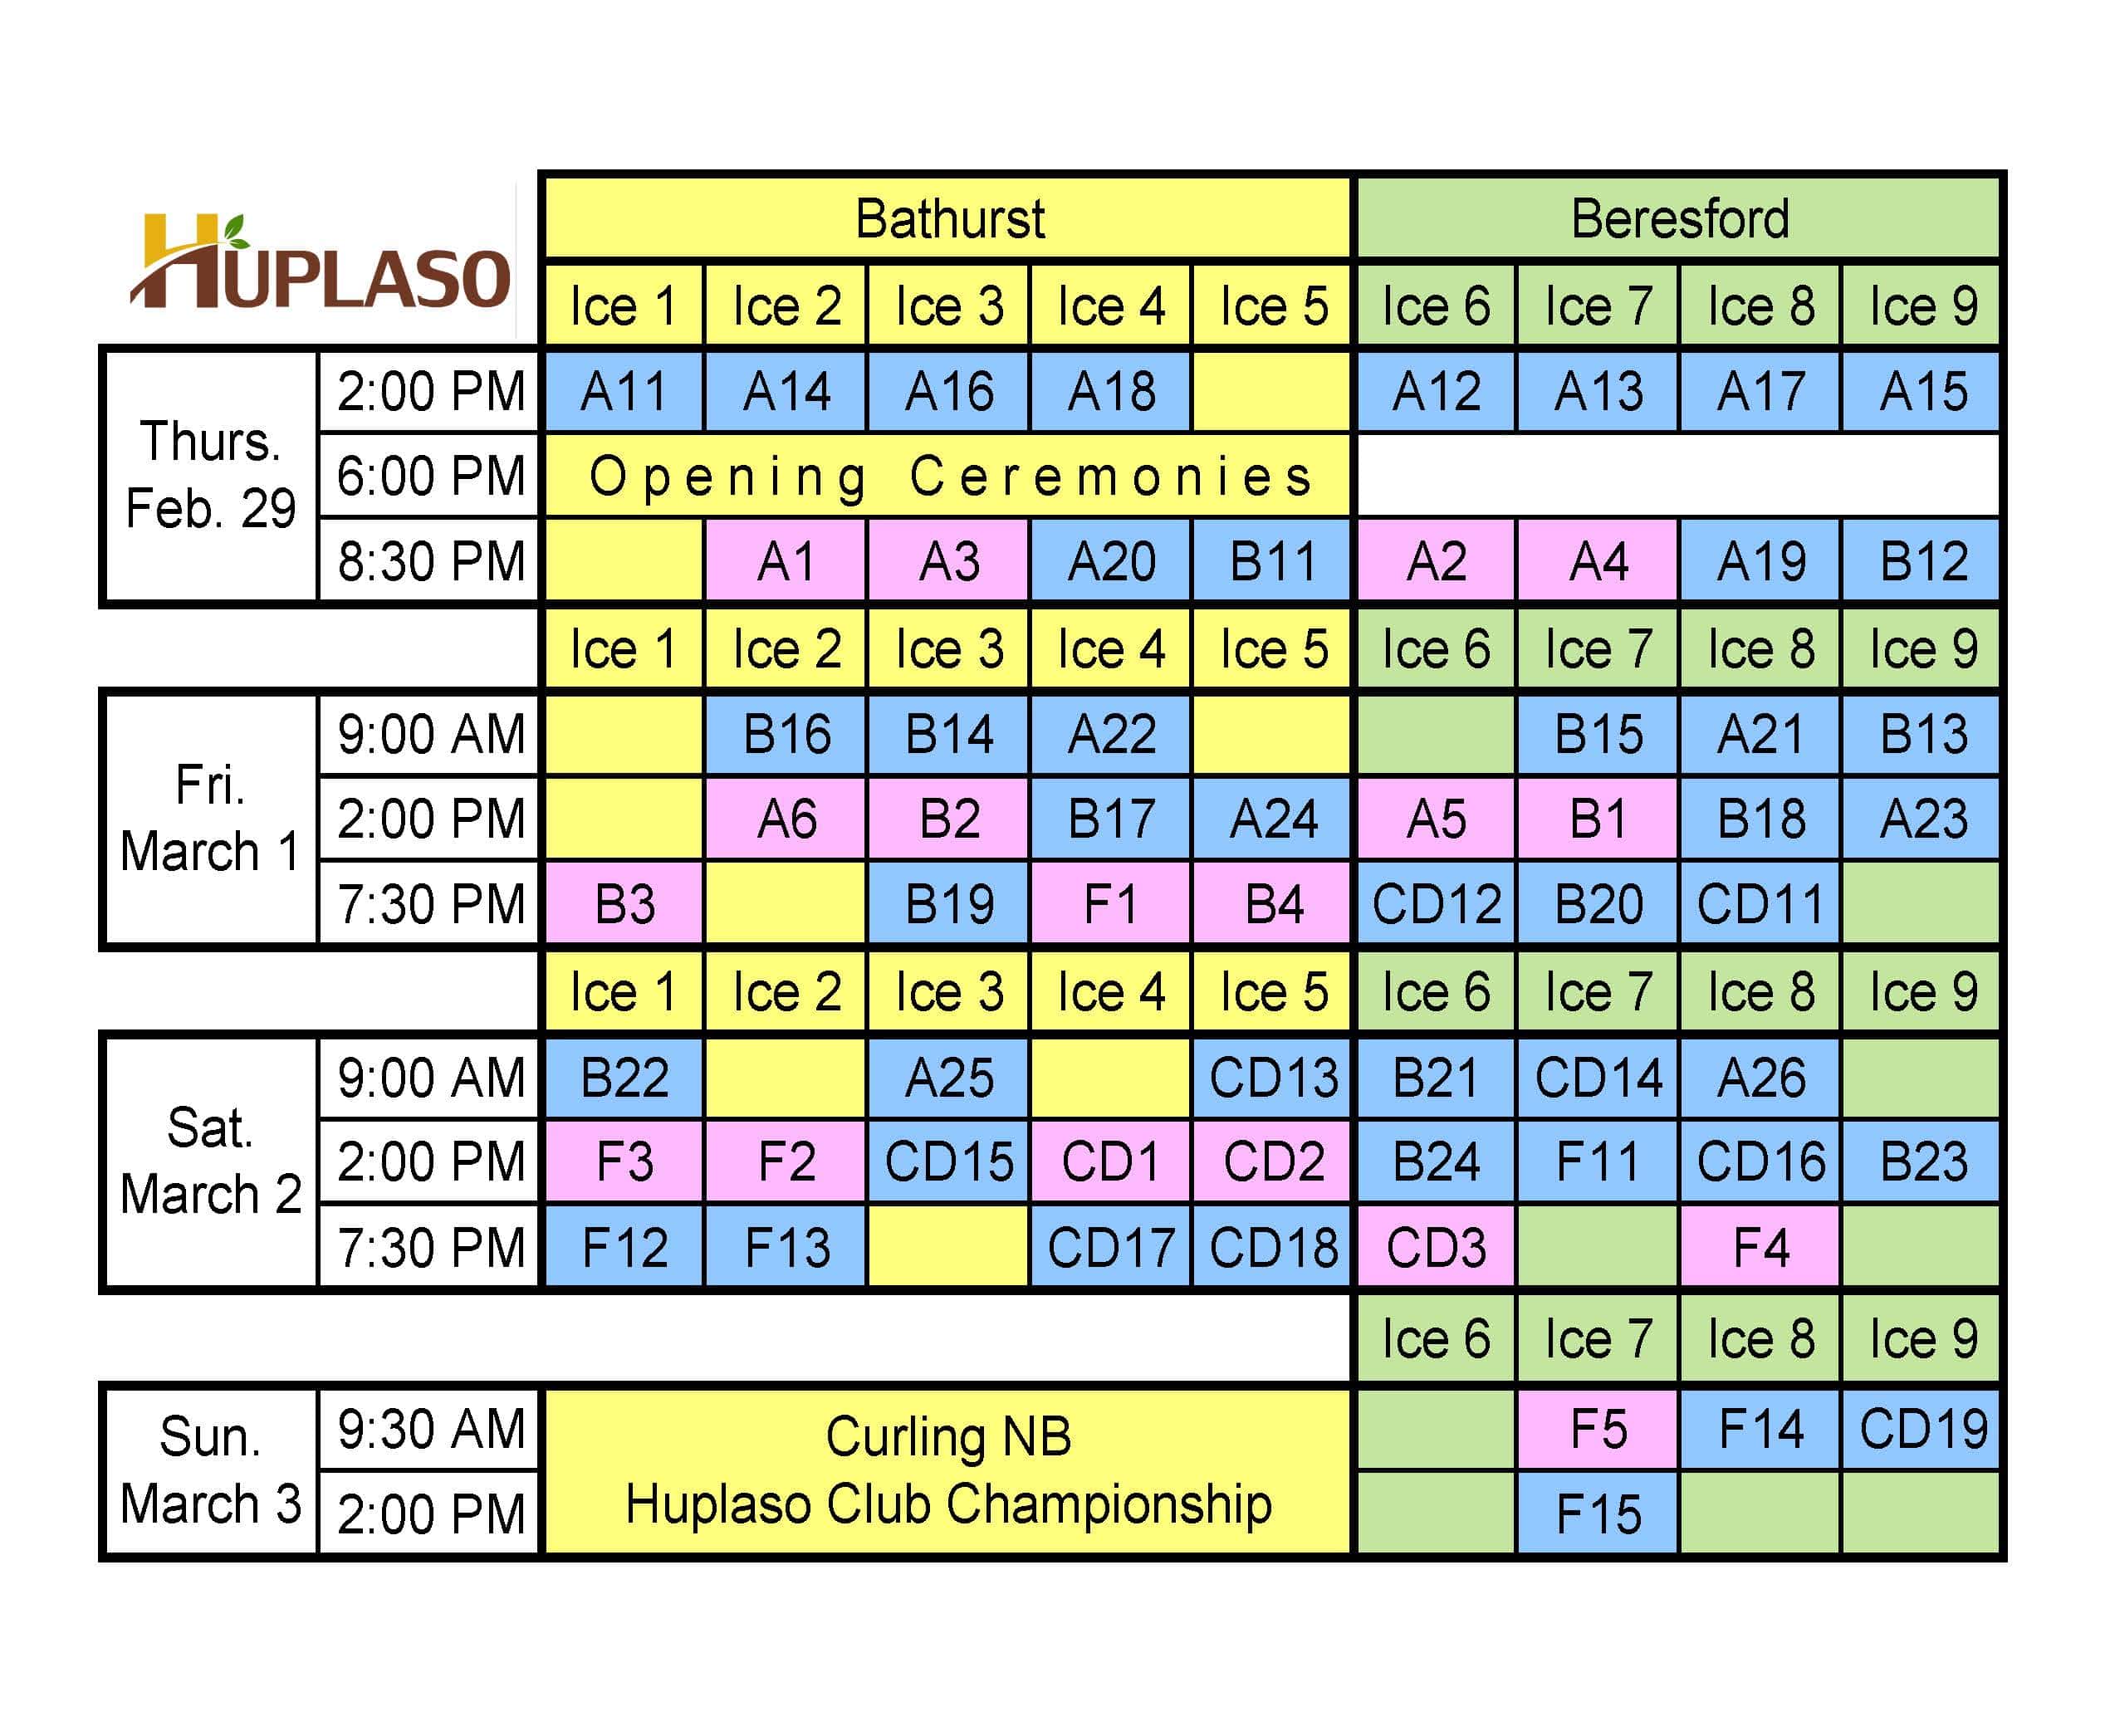 Schedule for the Bathurst Curling Club Tournament